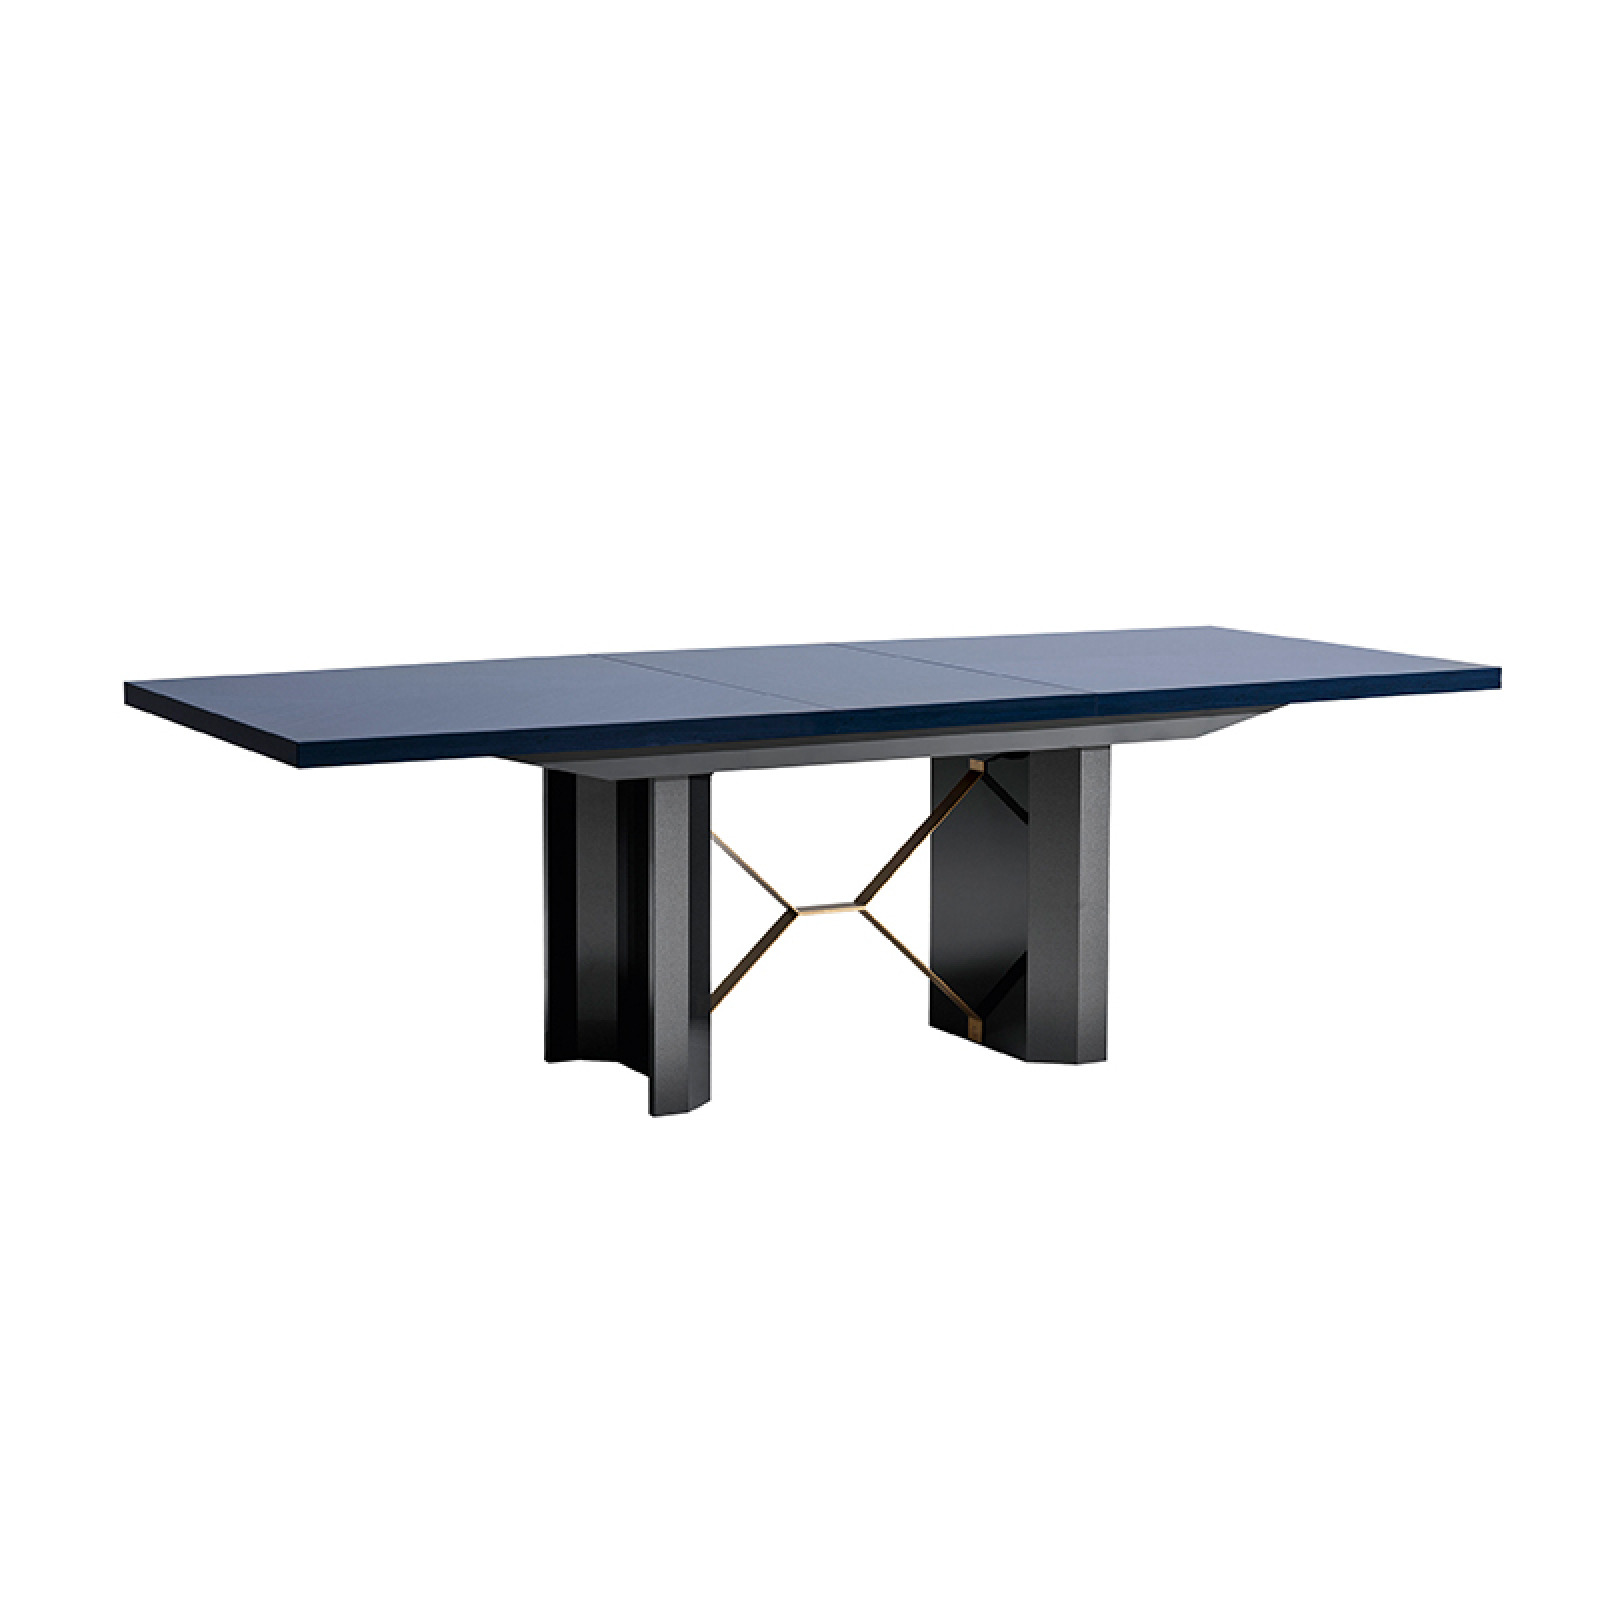 Oceanum dining table